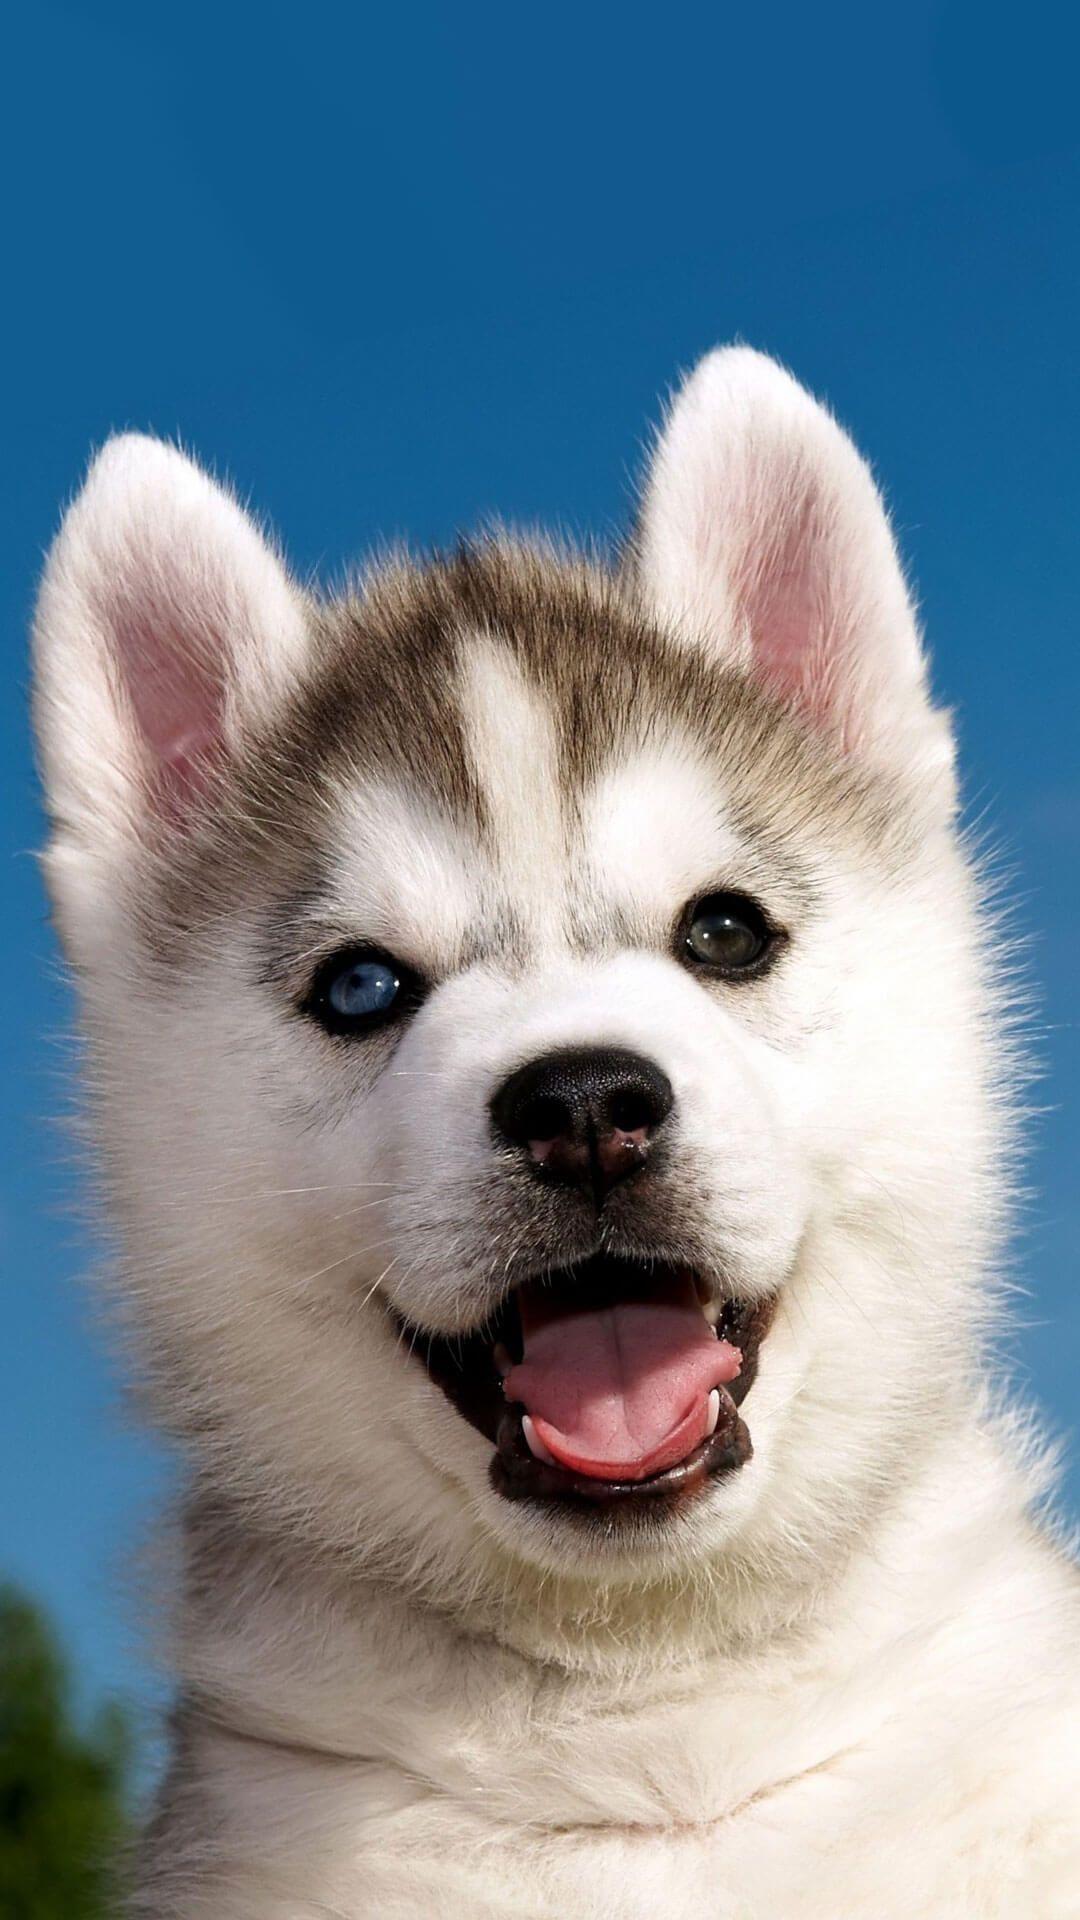 Cute Siberian Husky Puppy iPhone 6 Wallpaper. Dog wallpaper, Cute dog wallpaper, Dog wallpaper iphone